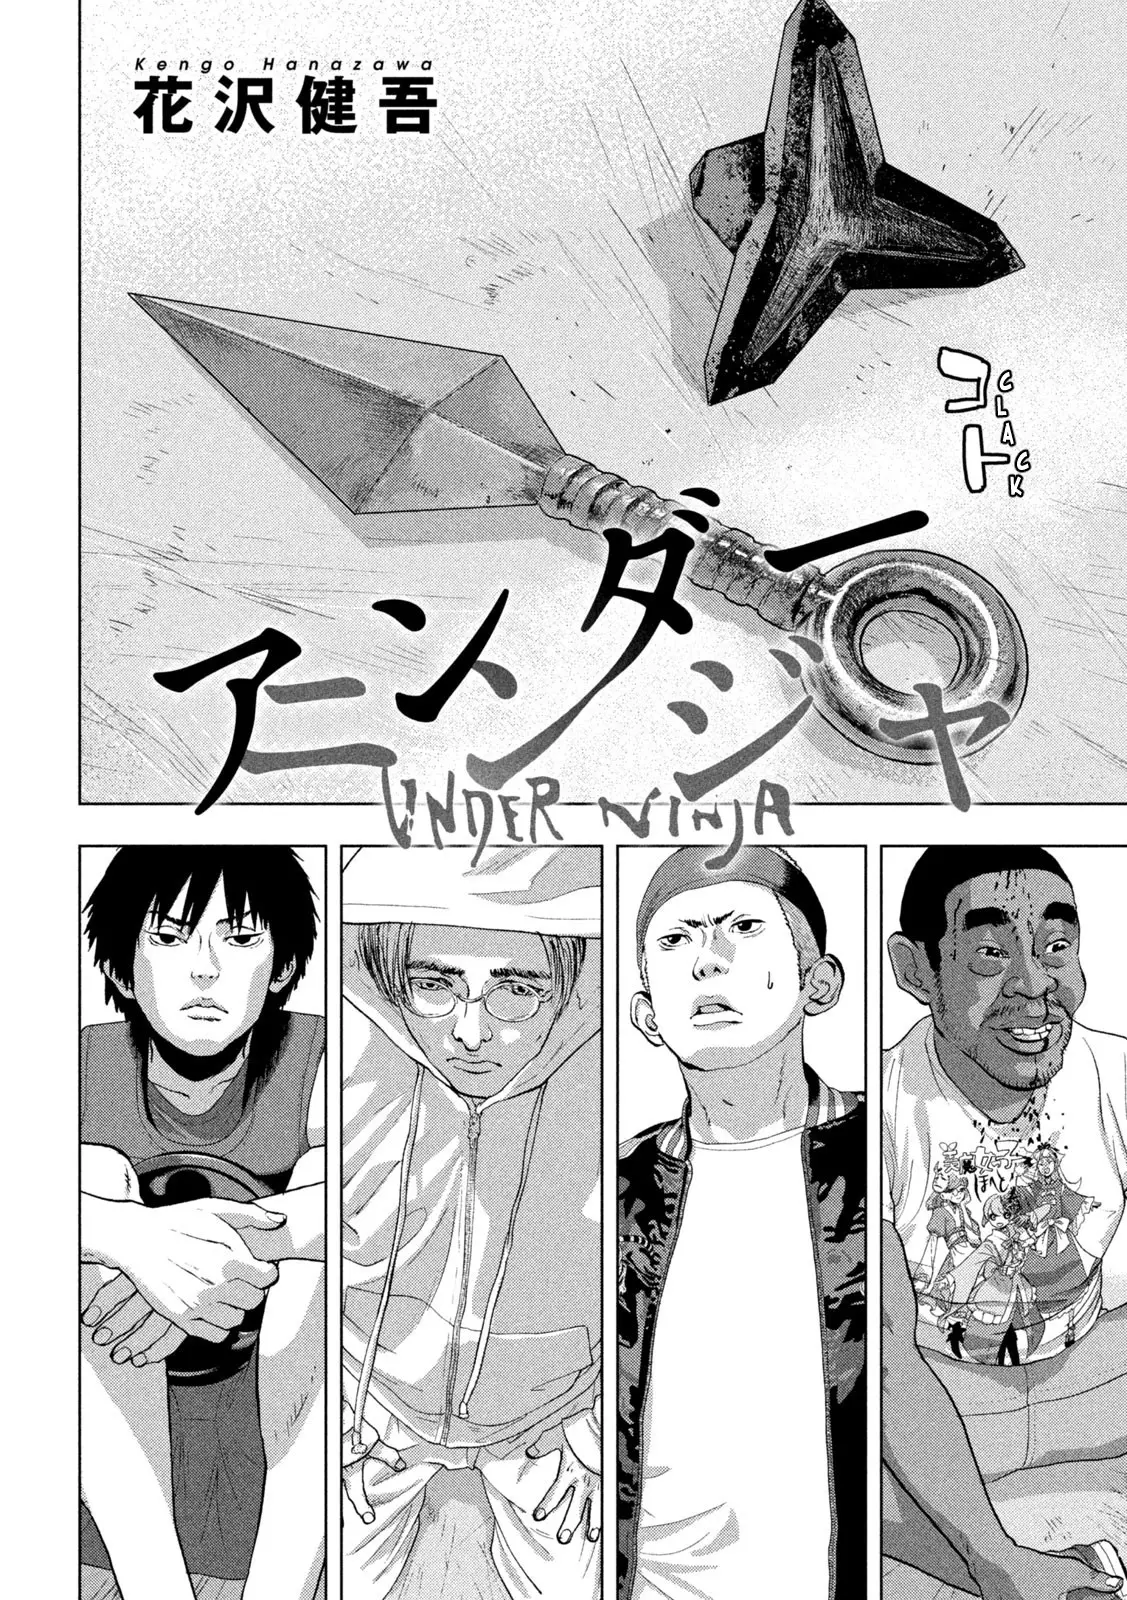 Under Ninja - 99 page 2-657a0793